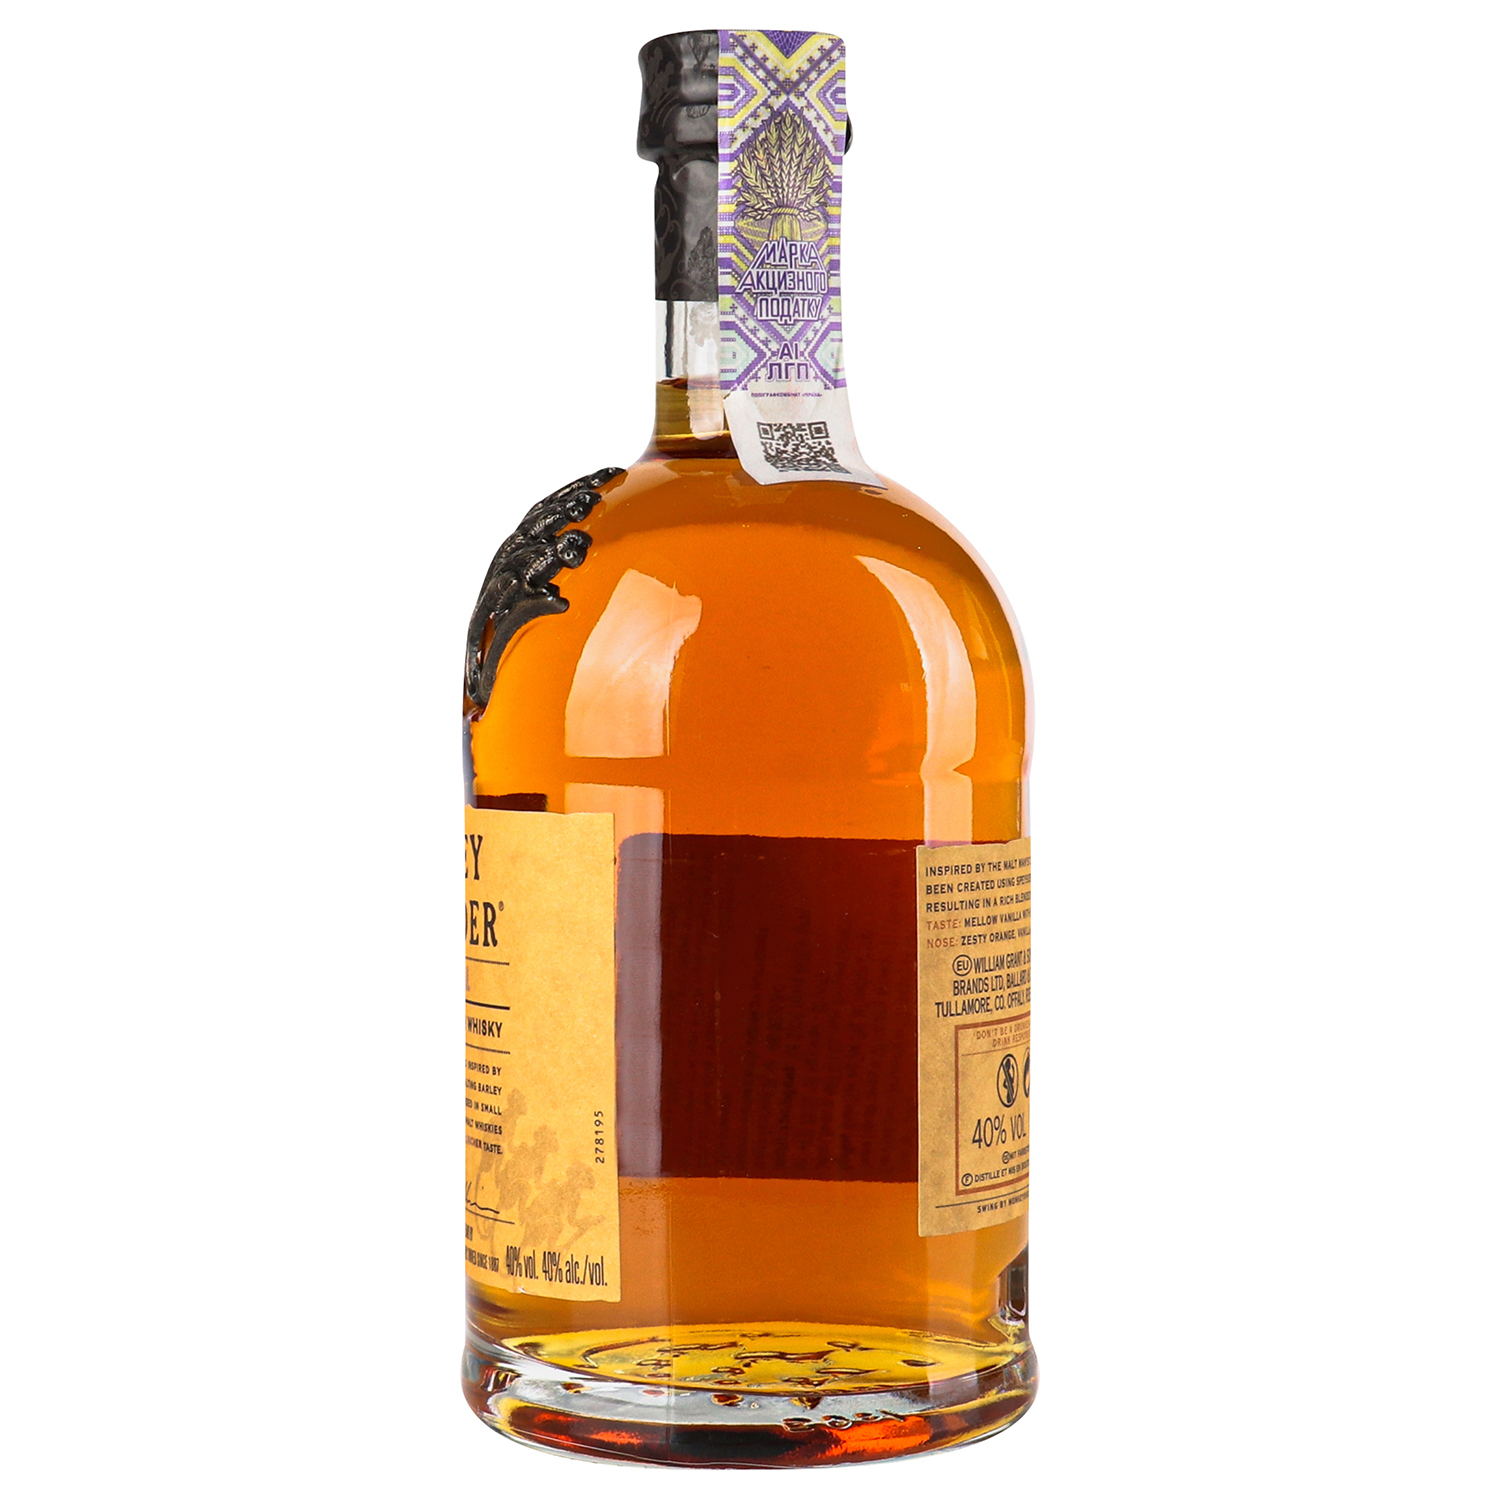 Віски Monkey Shoulder Blended Malt Scotch Whisky, 40%, 0,5 л - фото 2